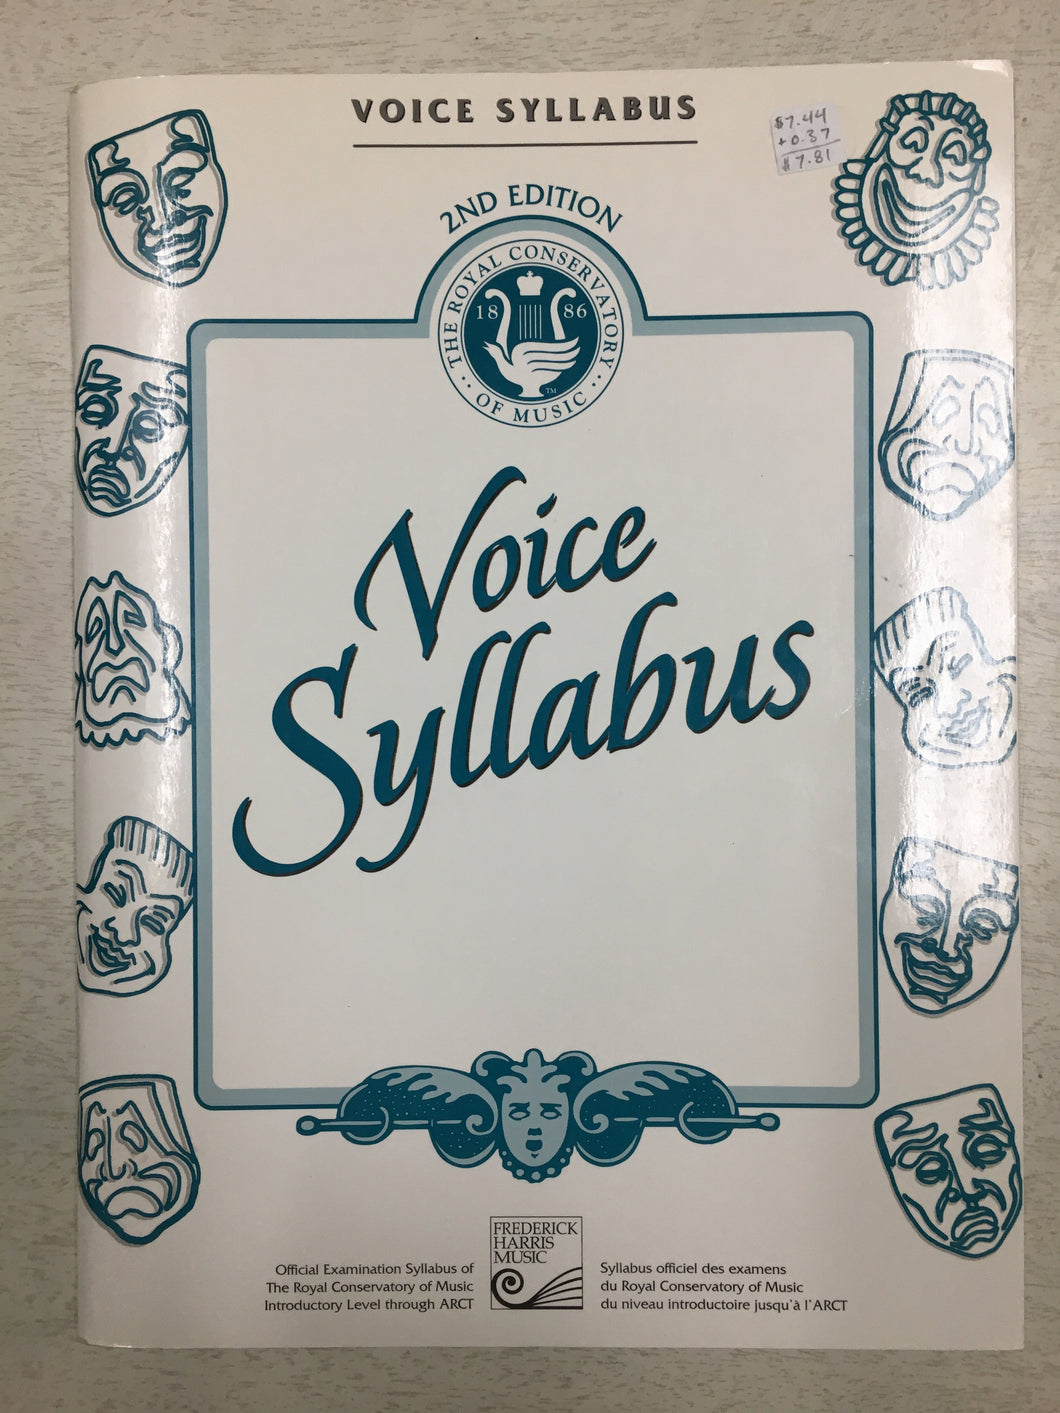 Voice Syllabus 2nd Edition 1998